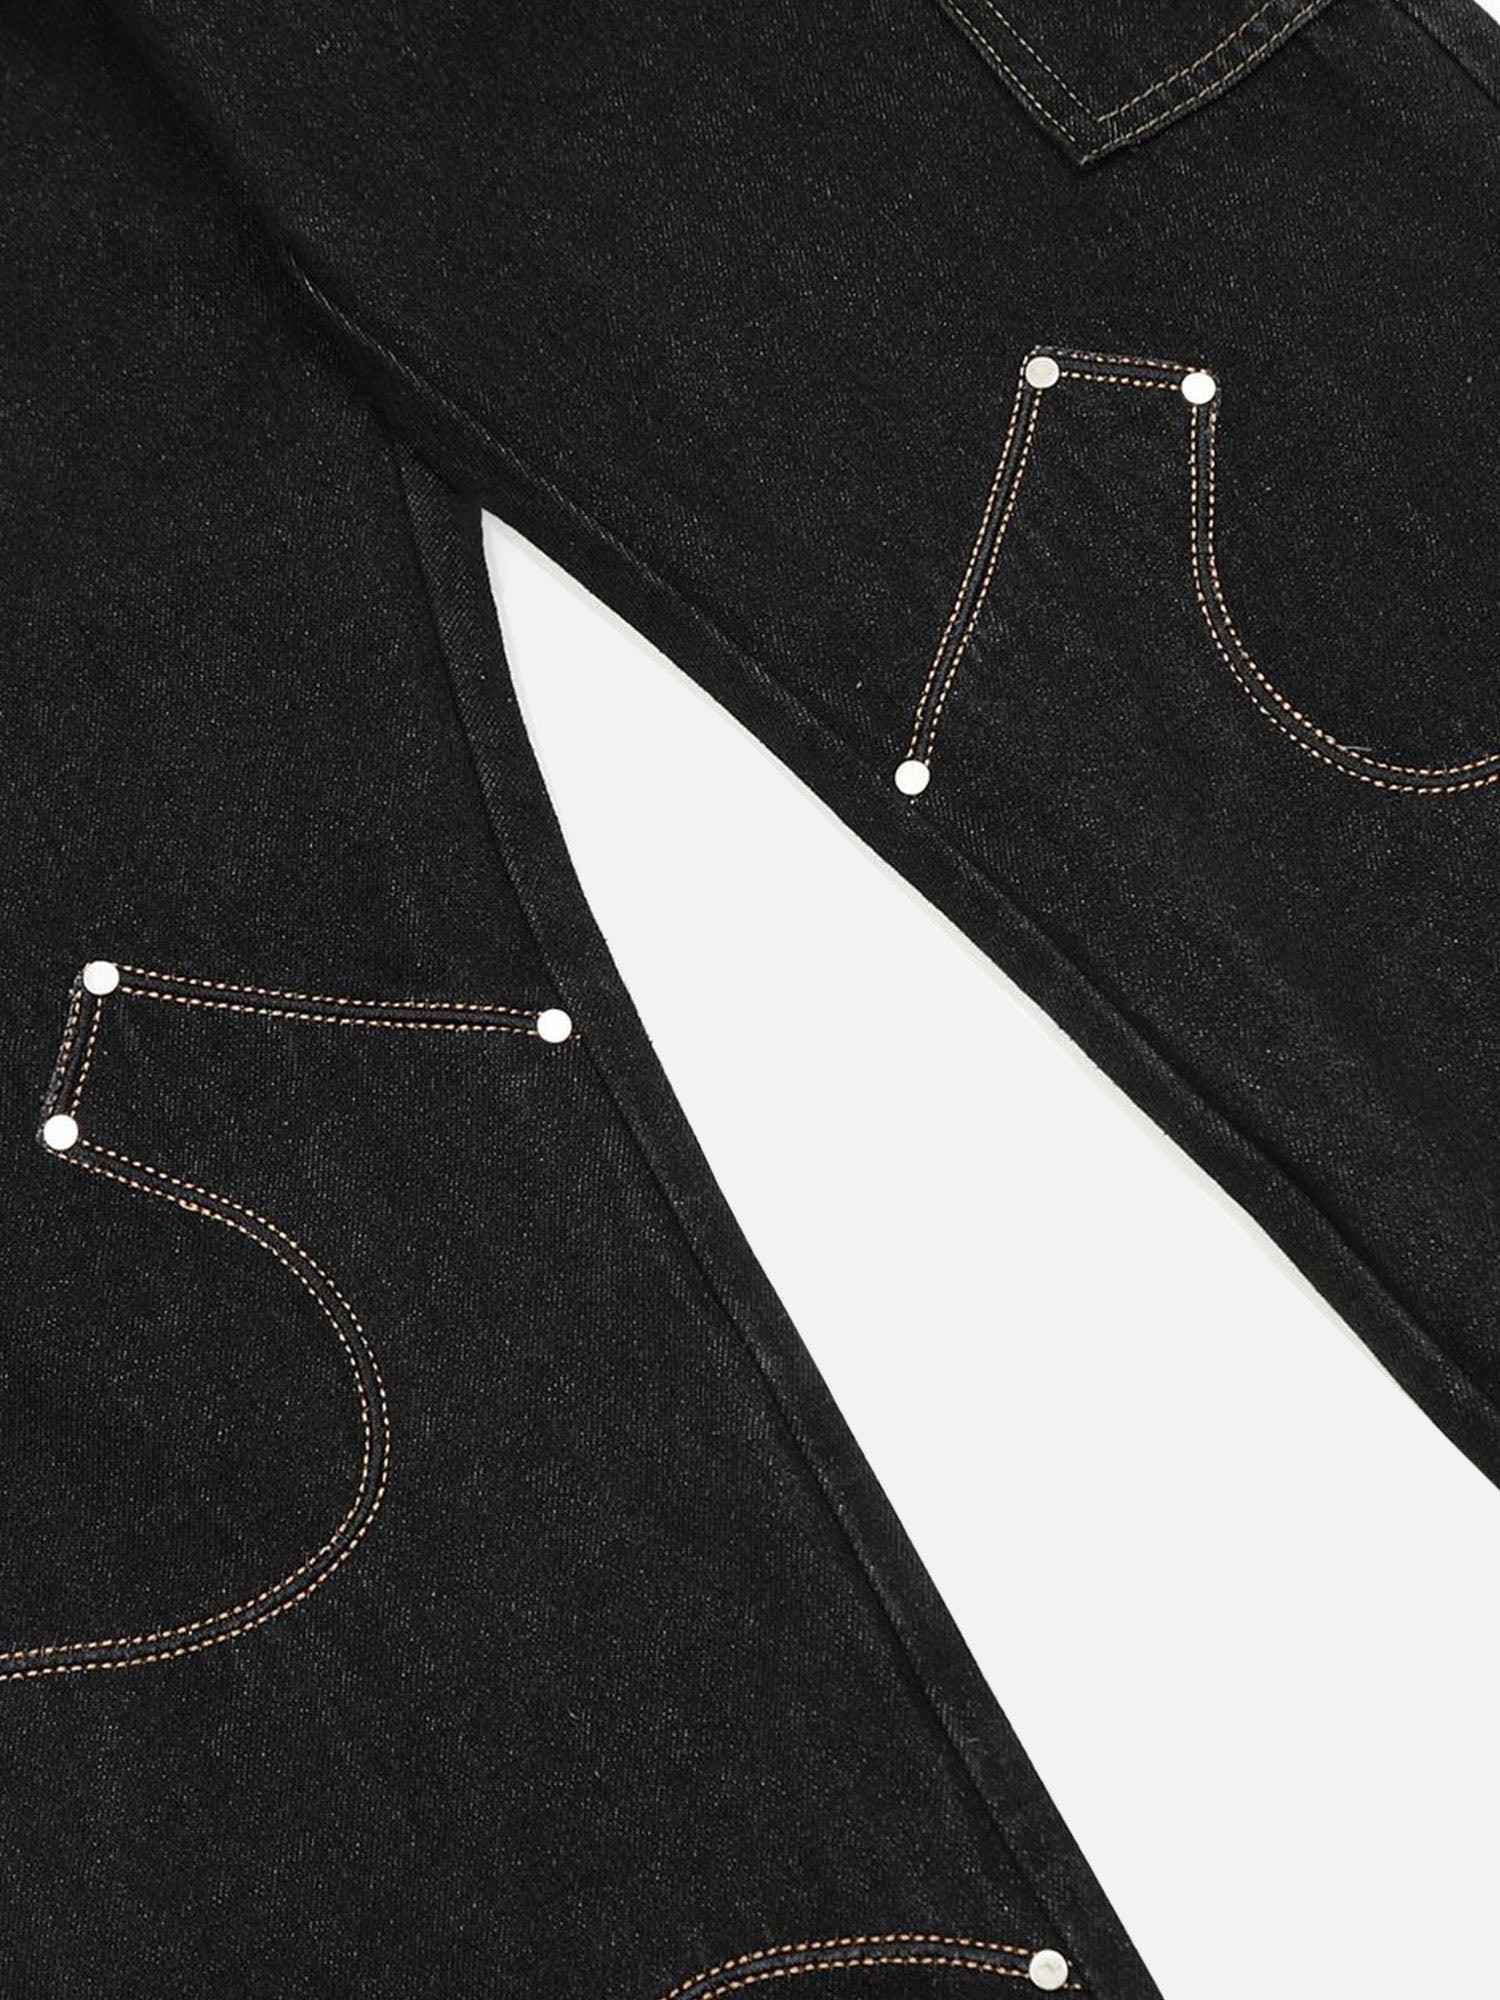 Thesupermade Fashionable Niche Design Pocket Work Jeans